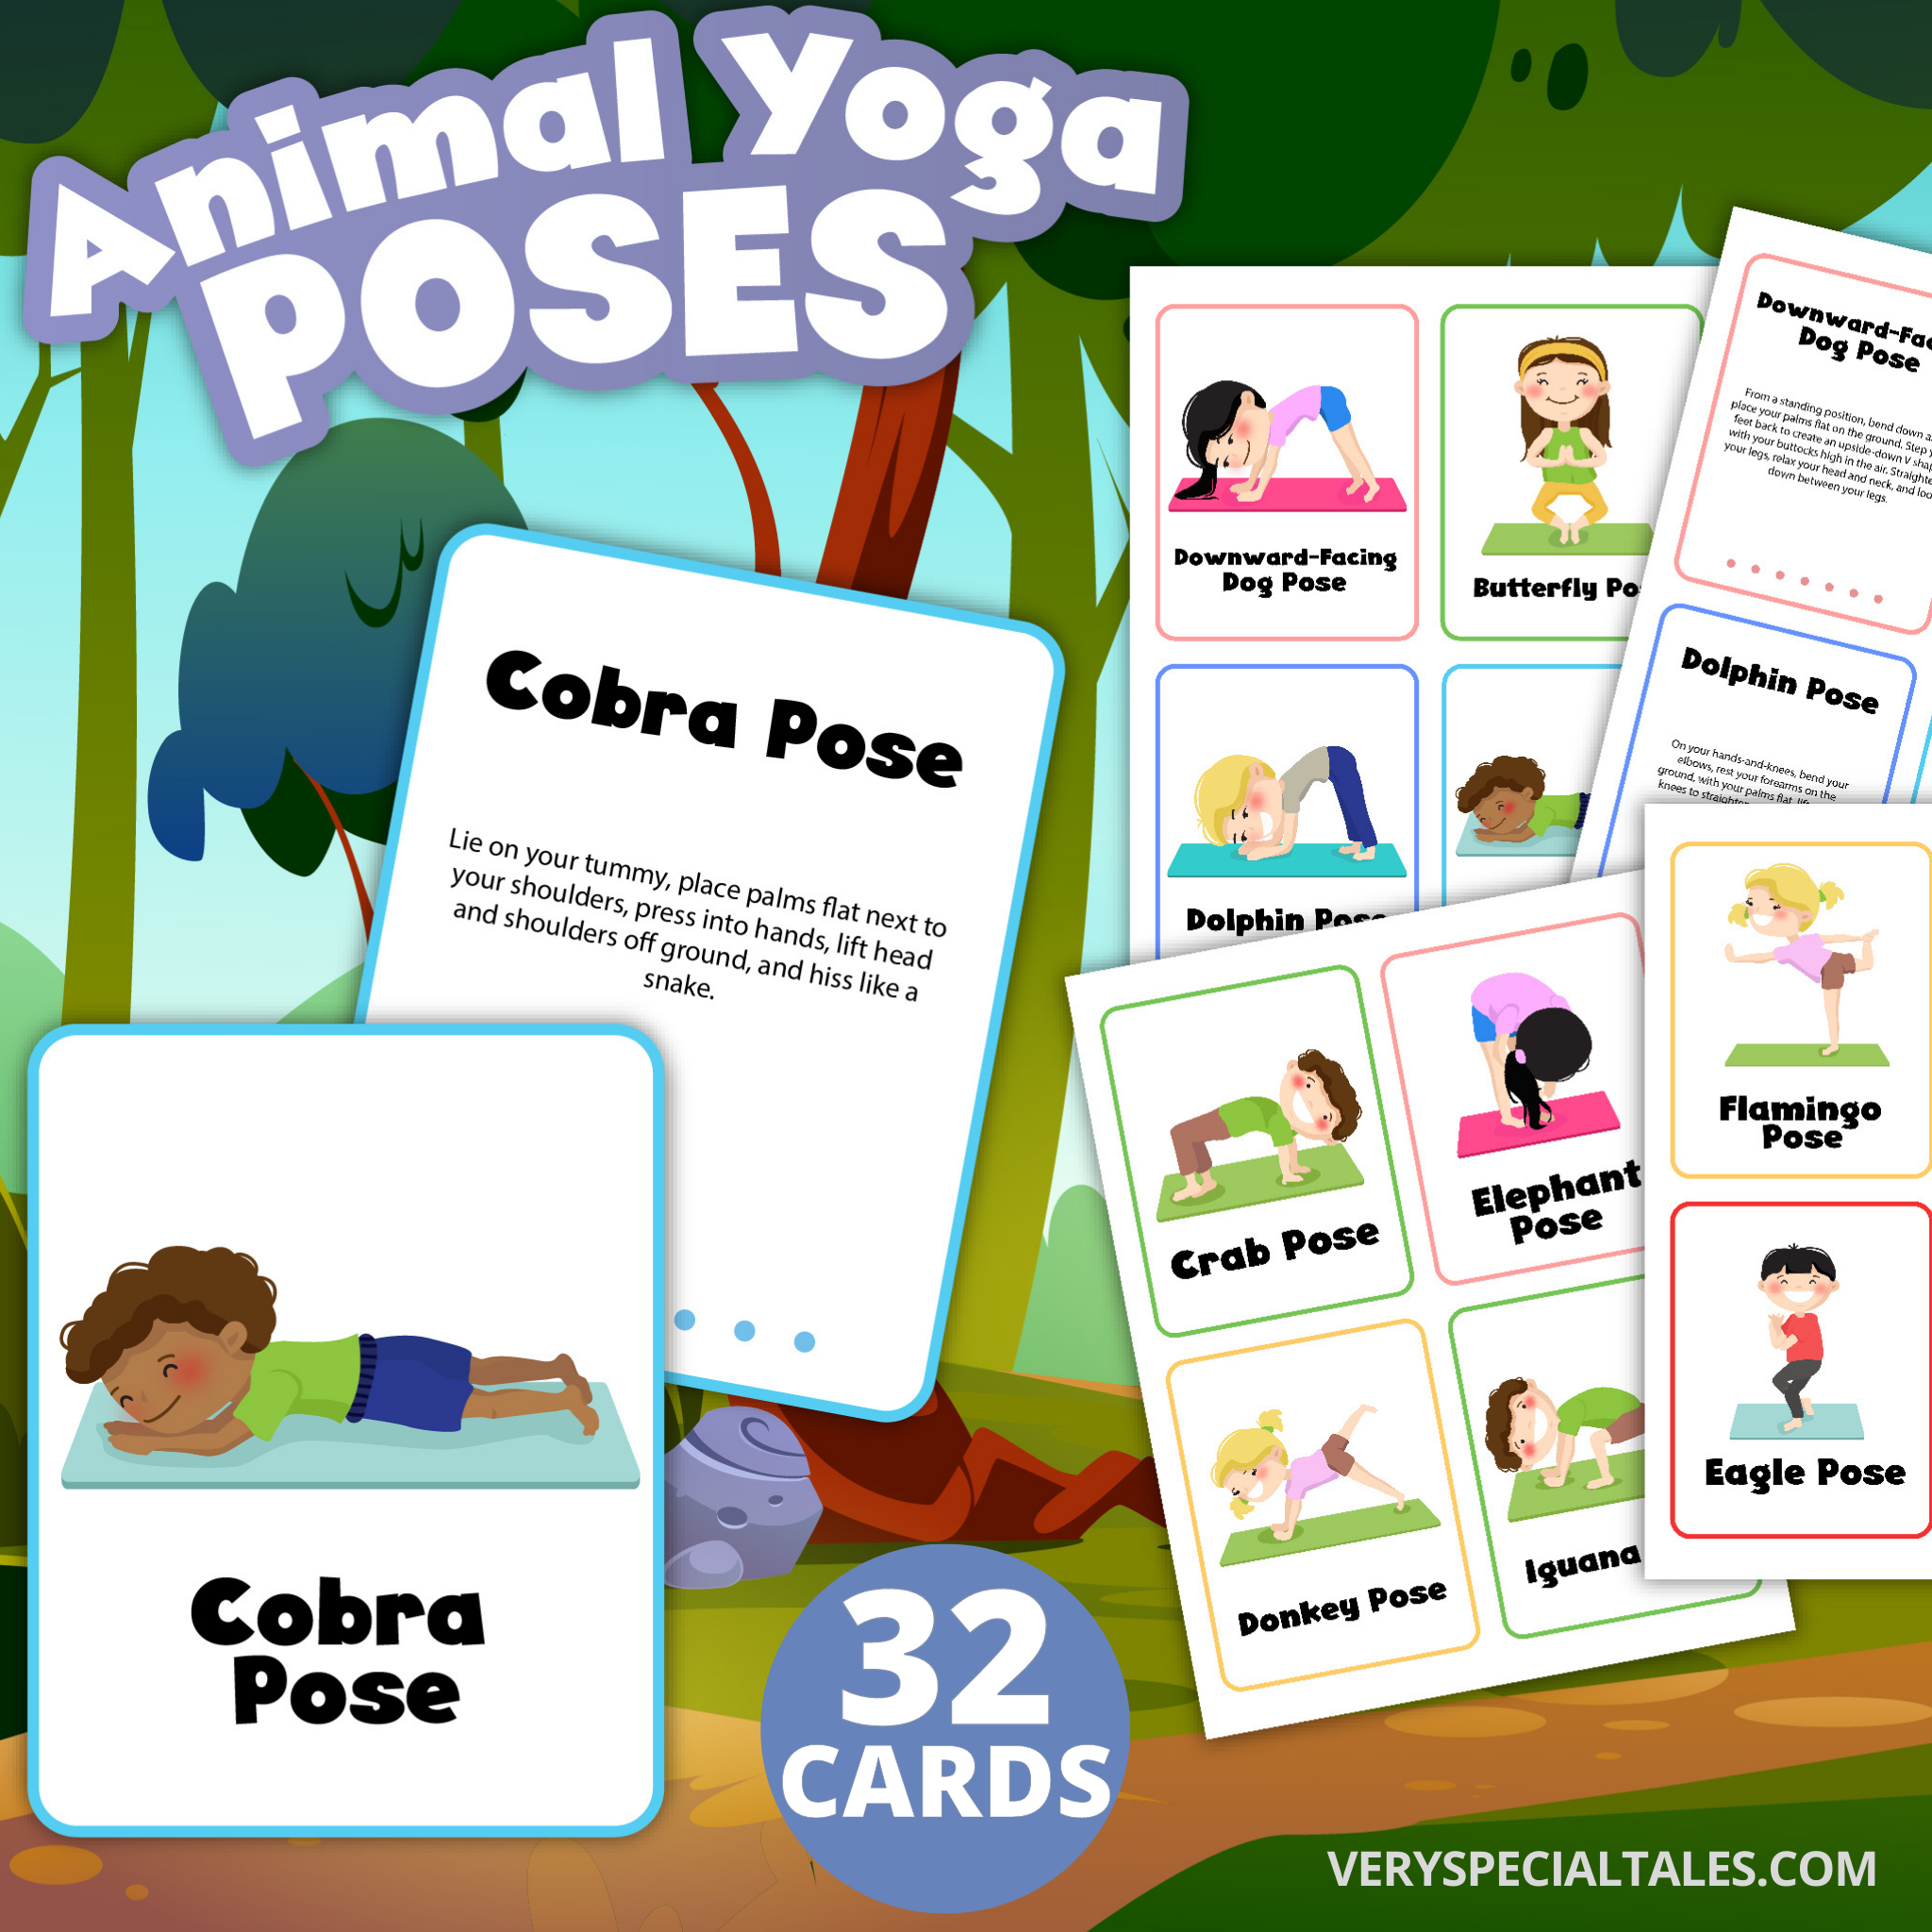 Animals of the World Yoga Pack – Kids Yoga Stories